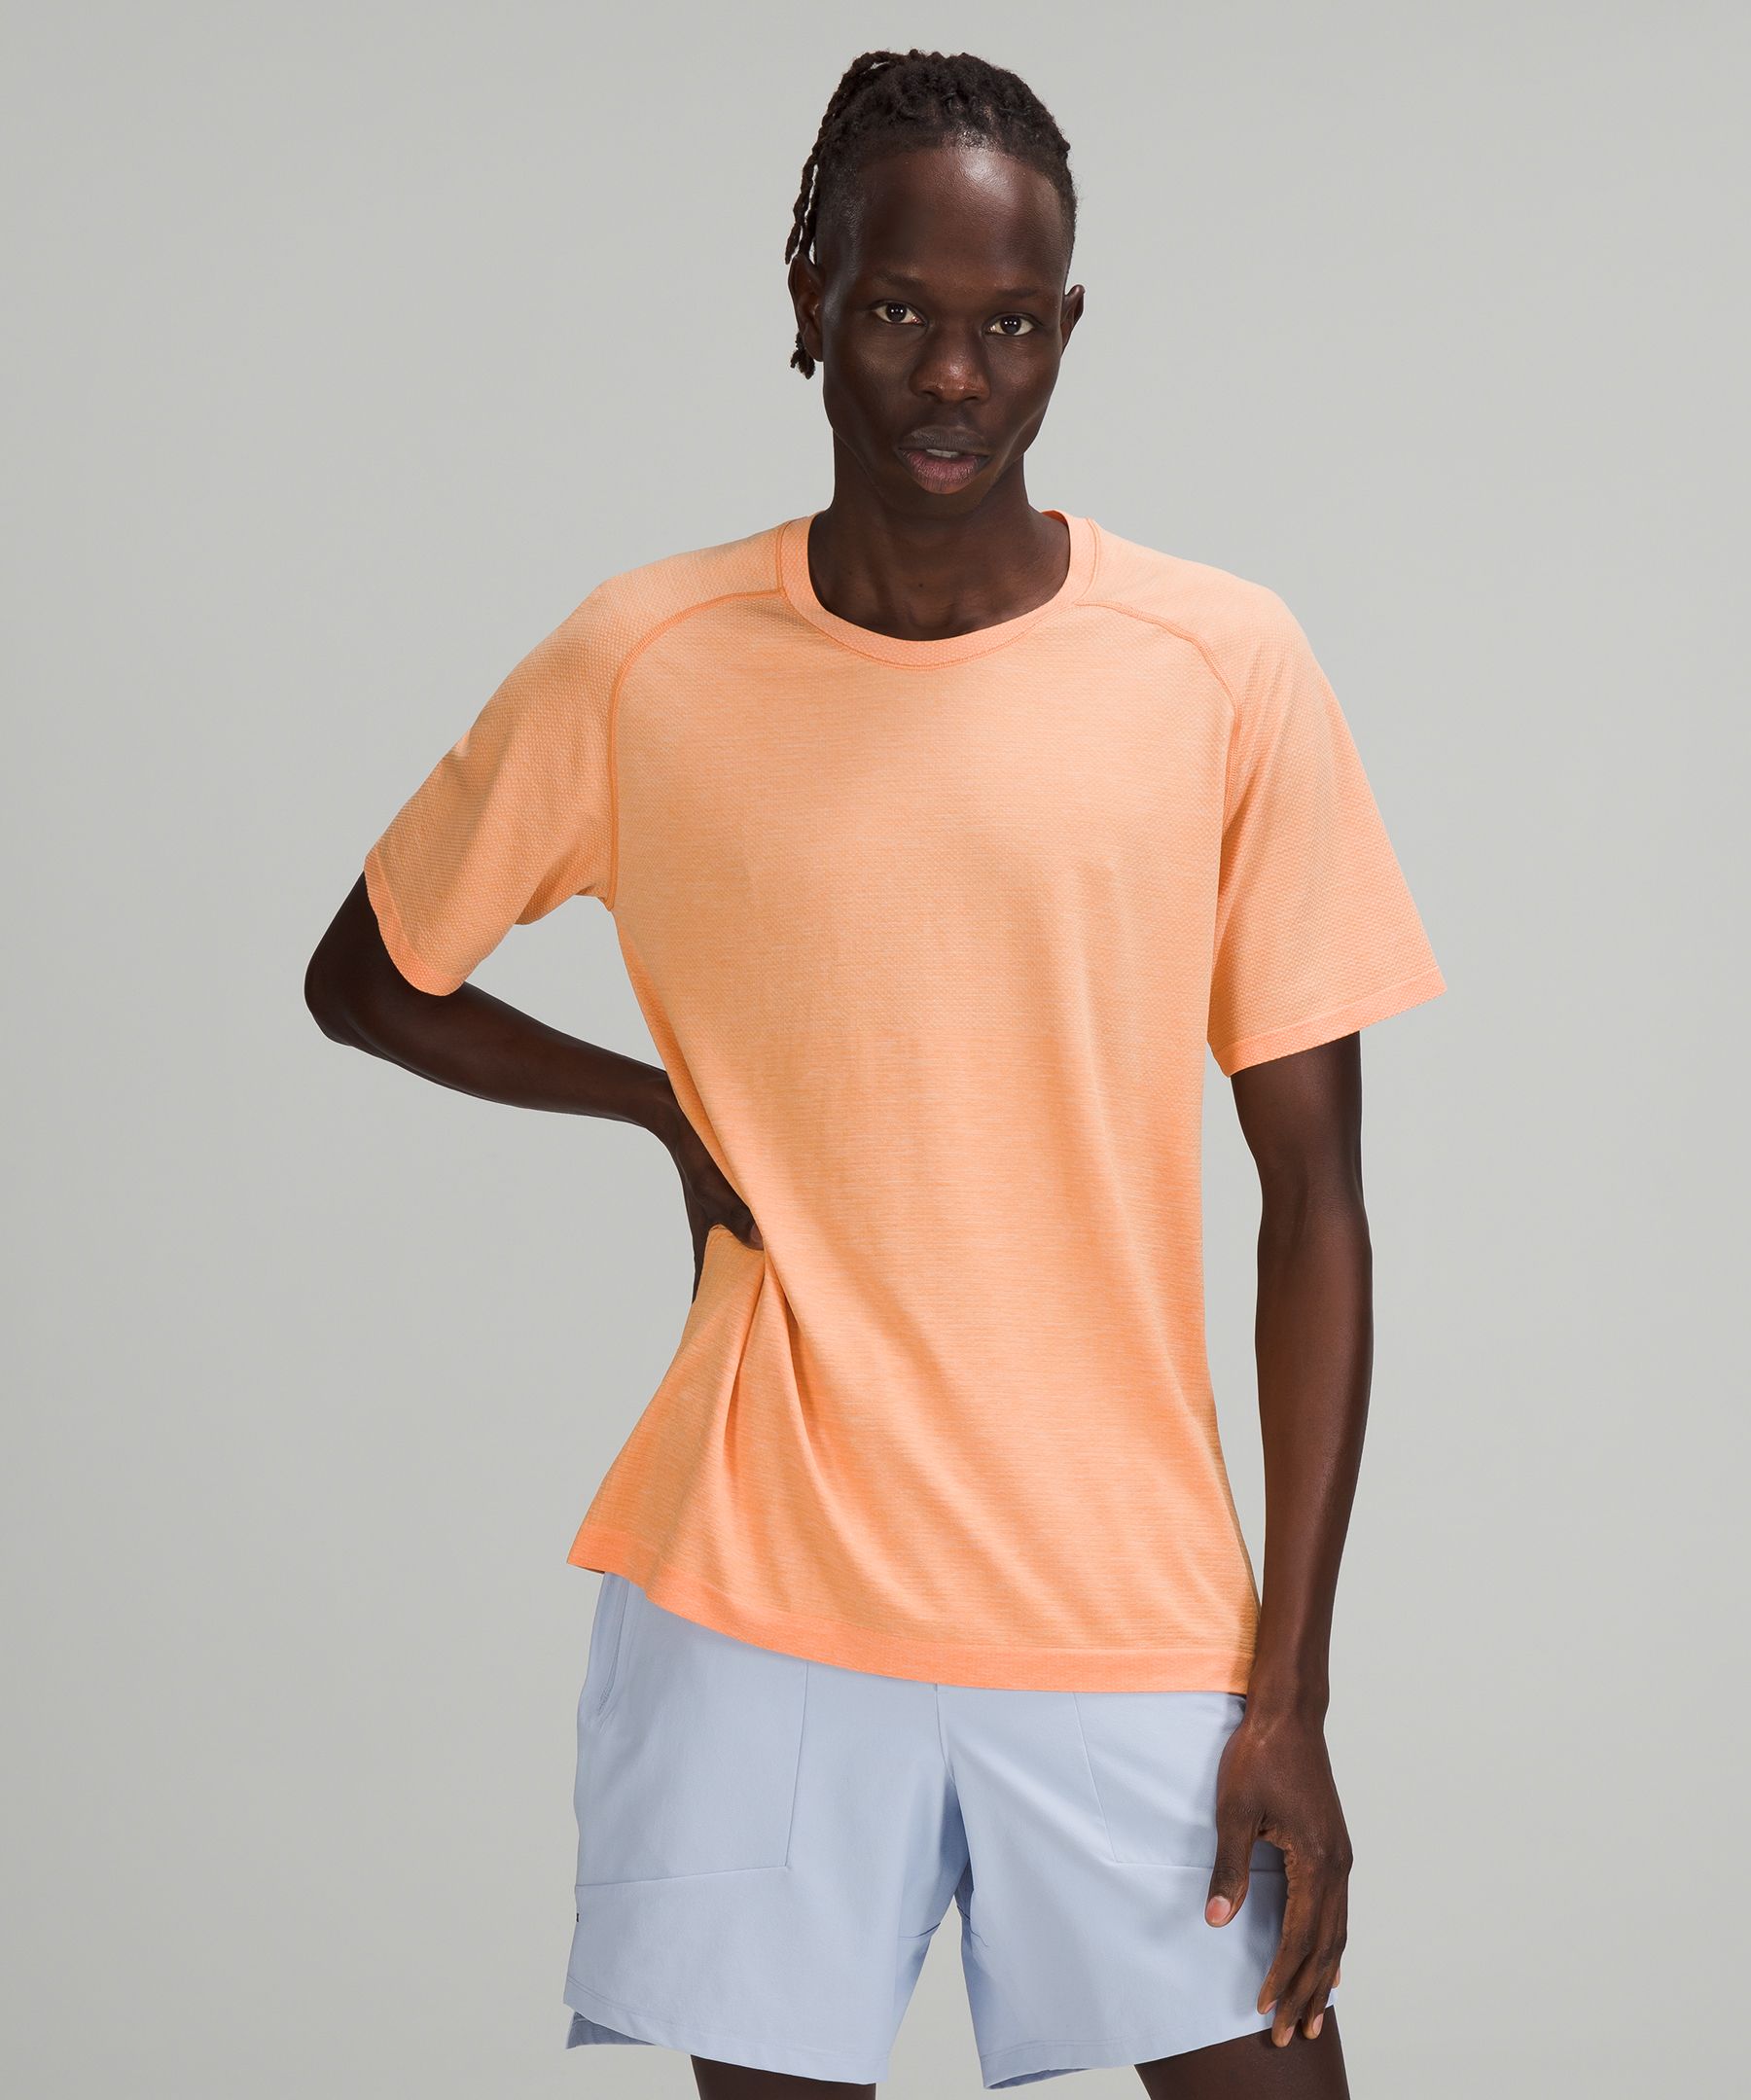 Lululemon Metal Vent Tech Short Sleeve Shirt 2.0 In Stoney Peach/warm Apricot